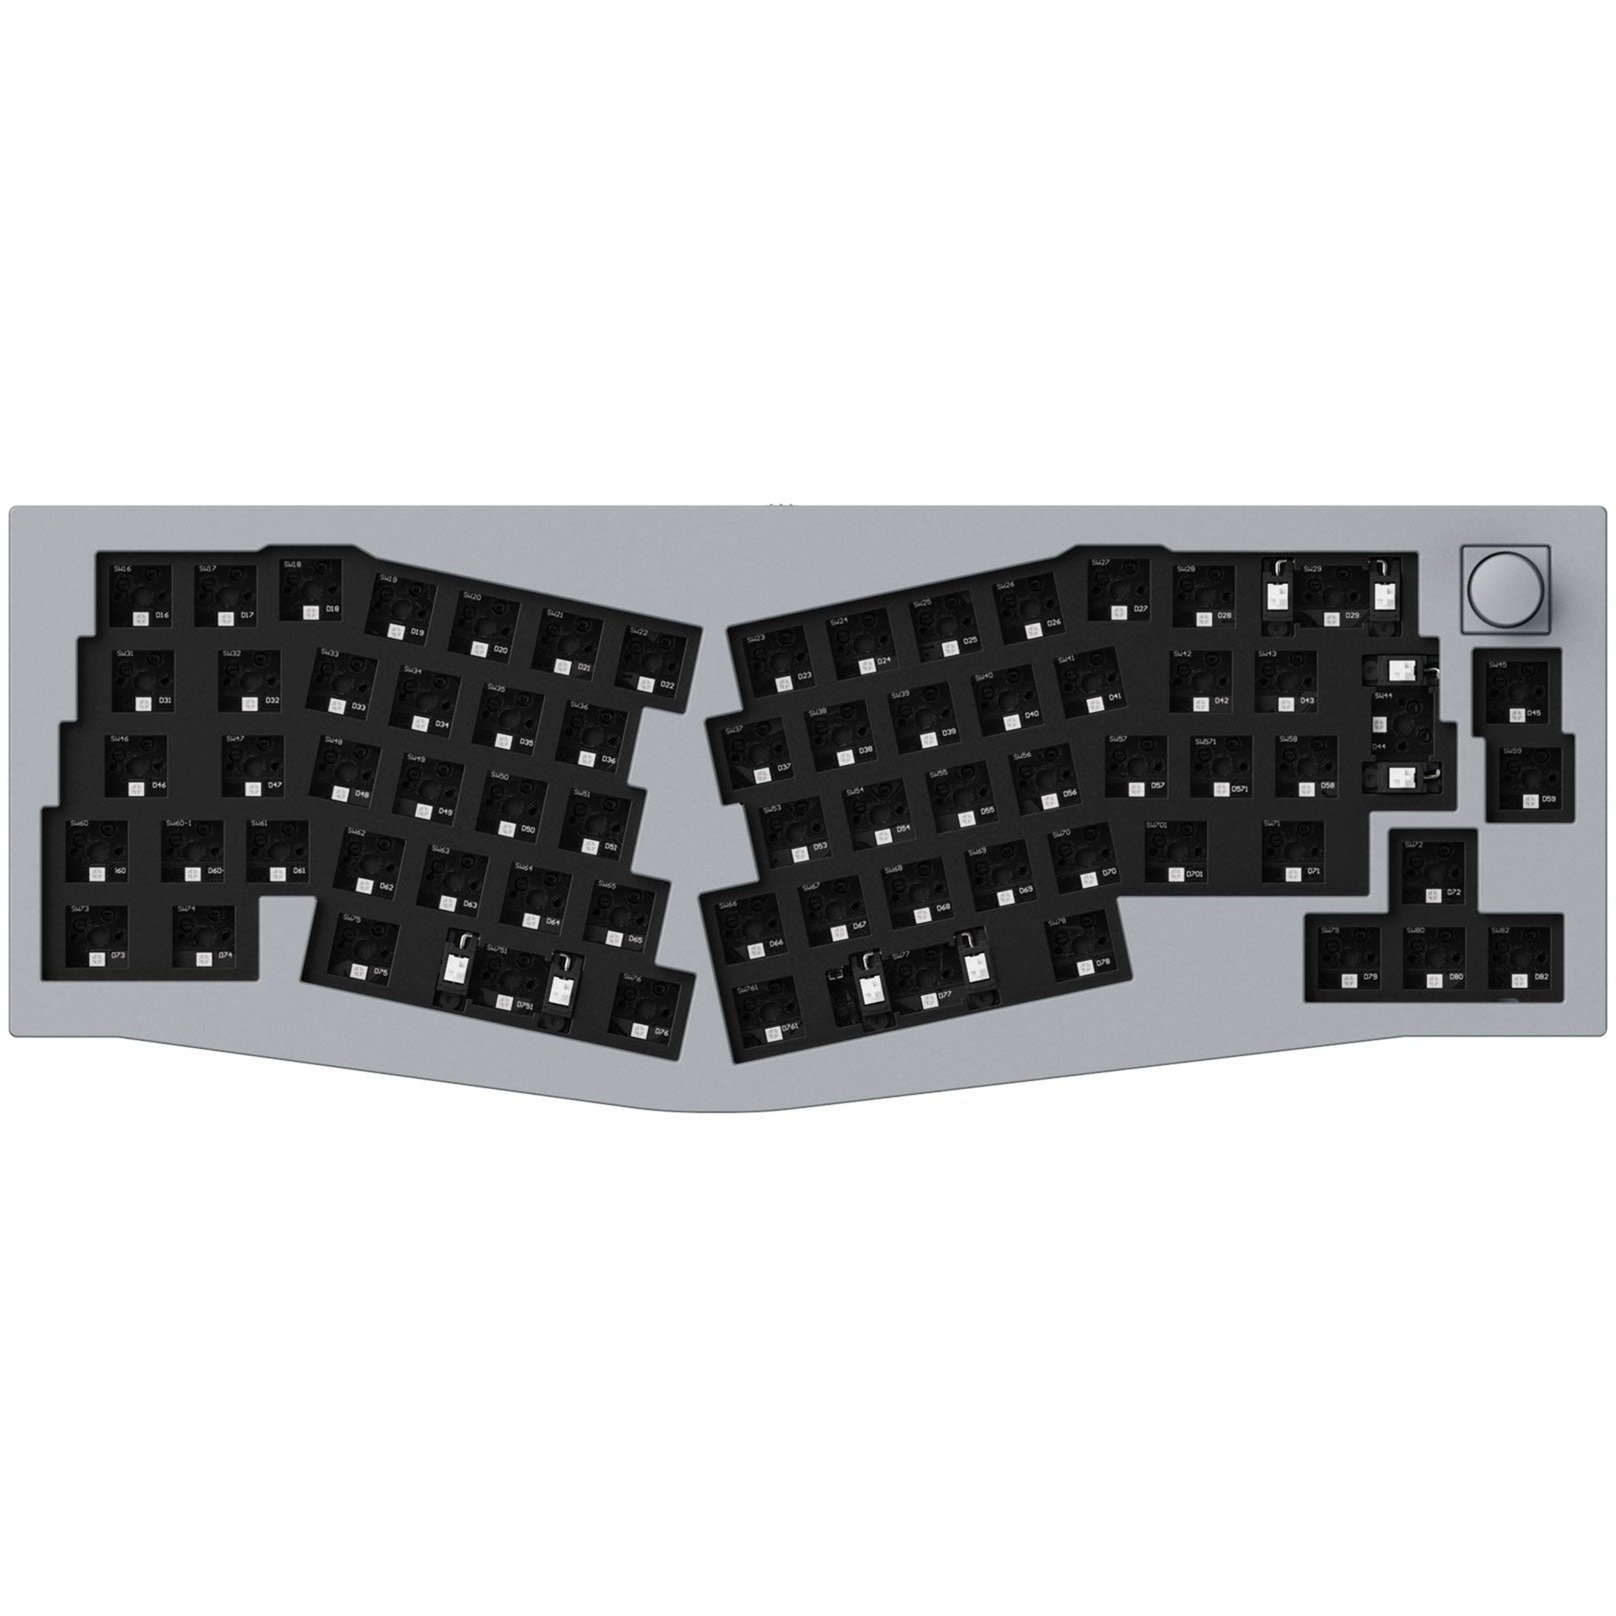 Q8 Barebone ISO Knob, Gaming-Tastatur von Keychron